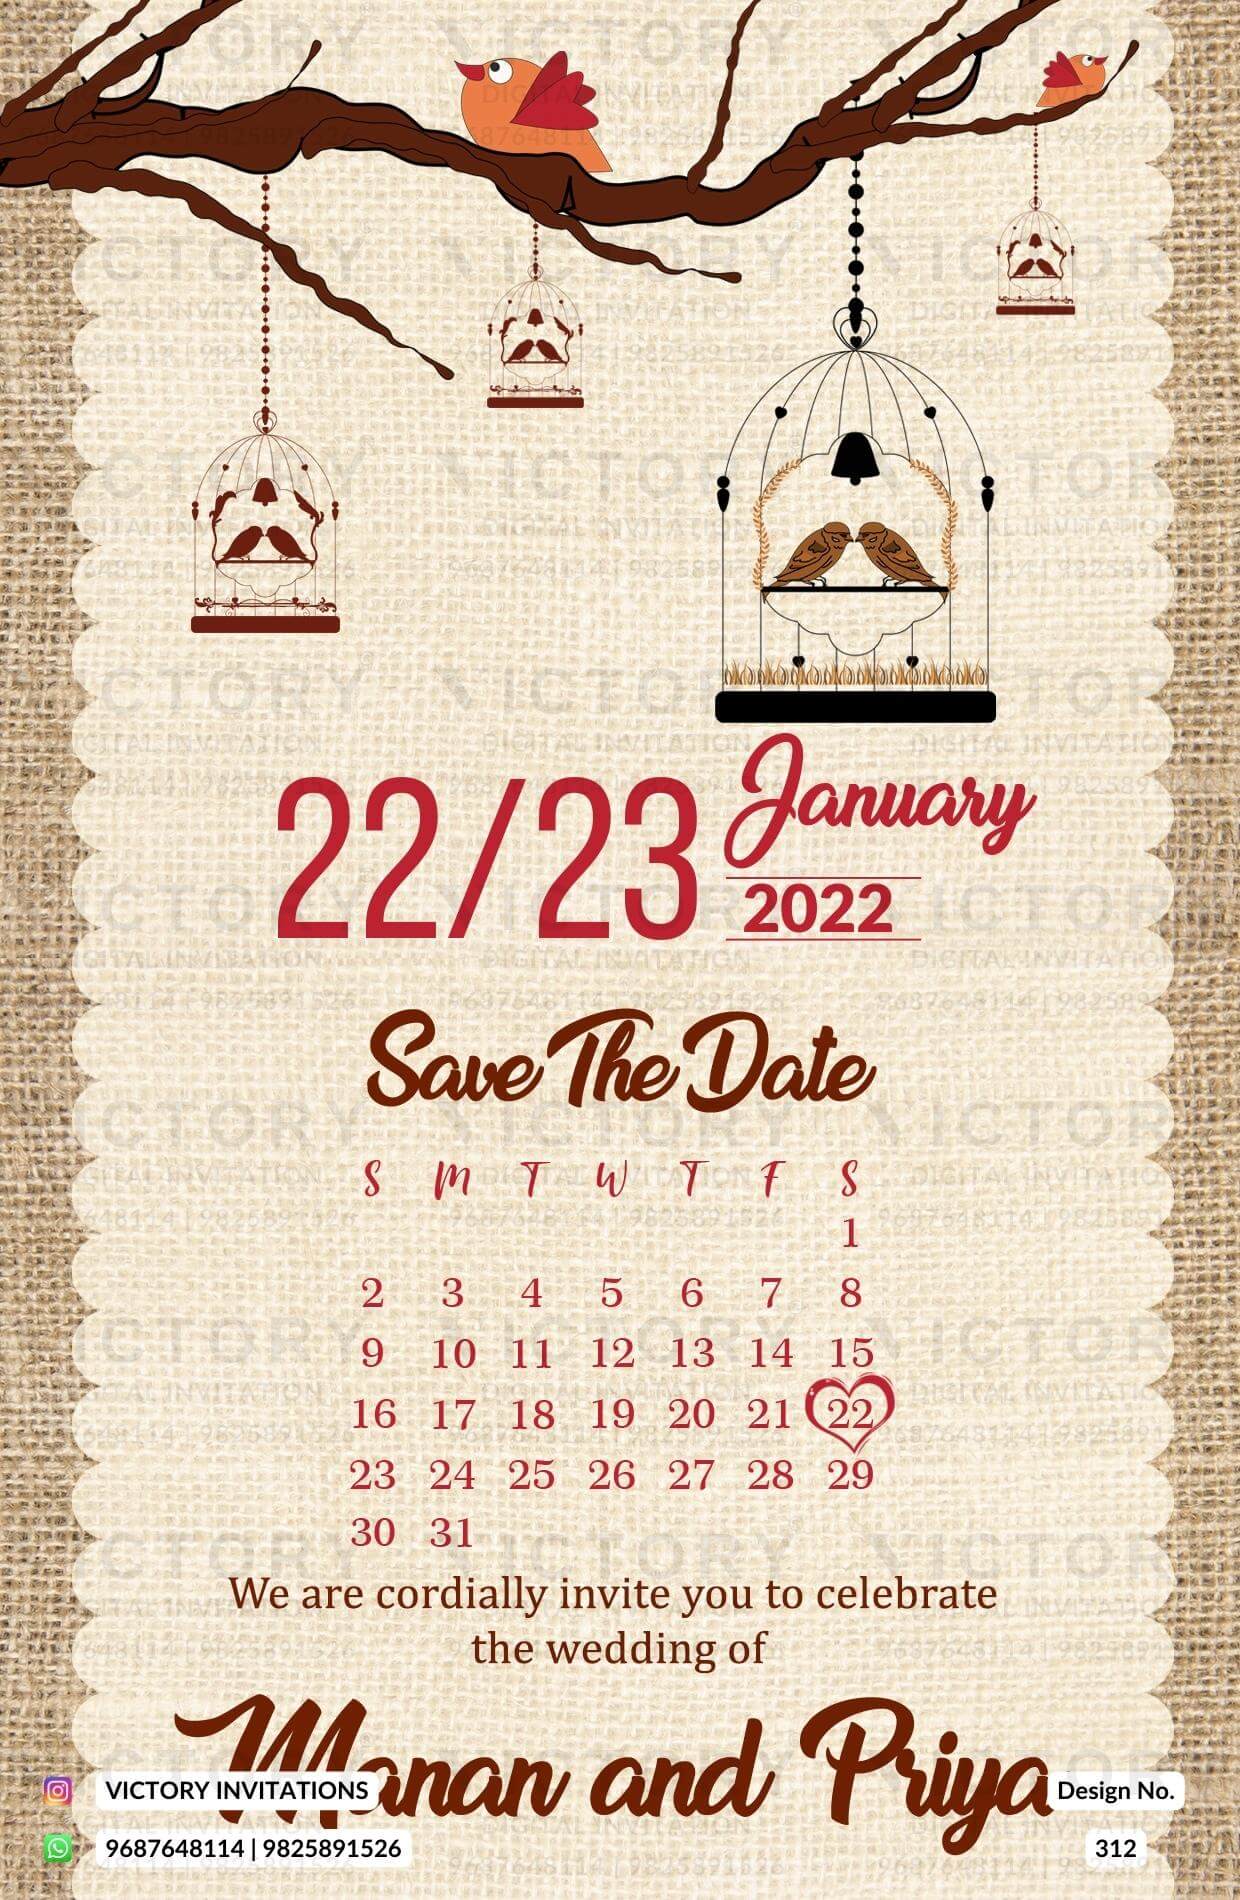 Save the Date digital invitation card design no.312